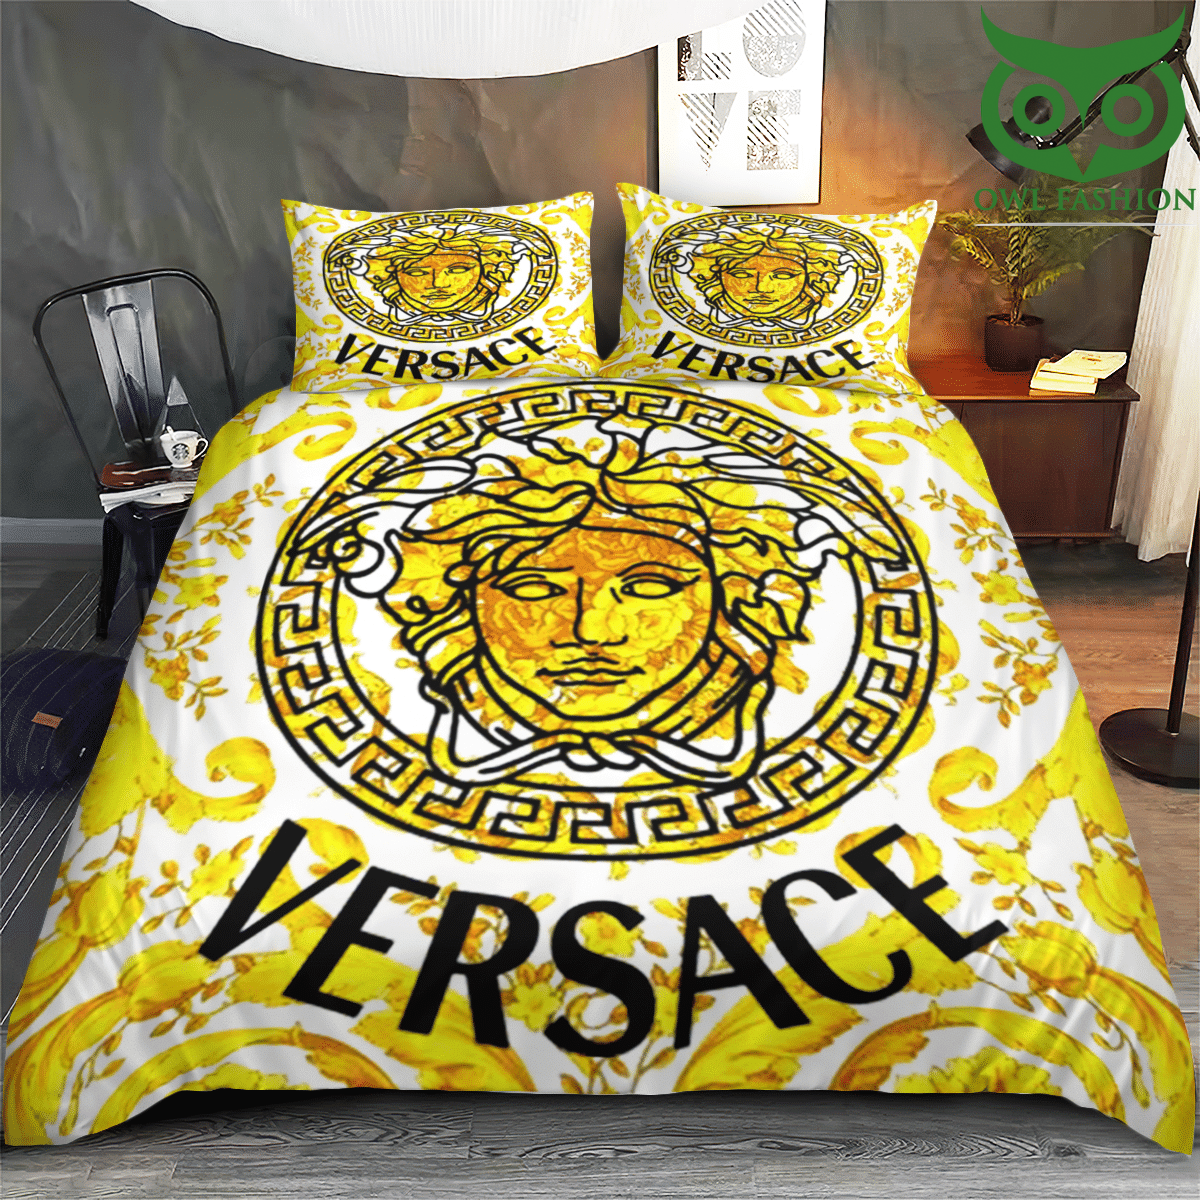 98 PREMIUM Yellow flower pattern Versace bedding set